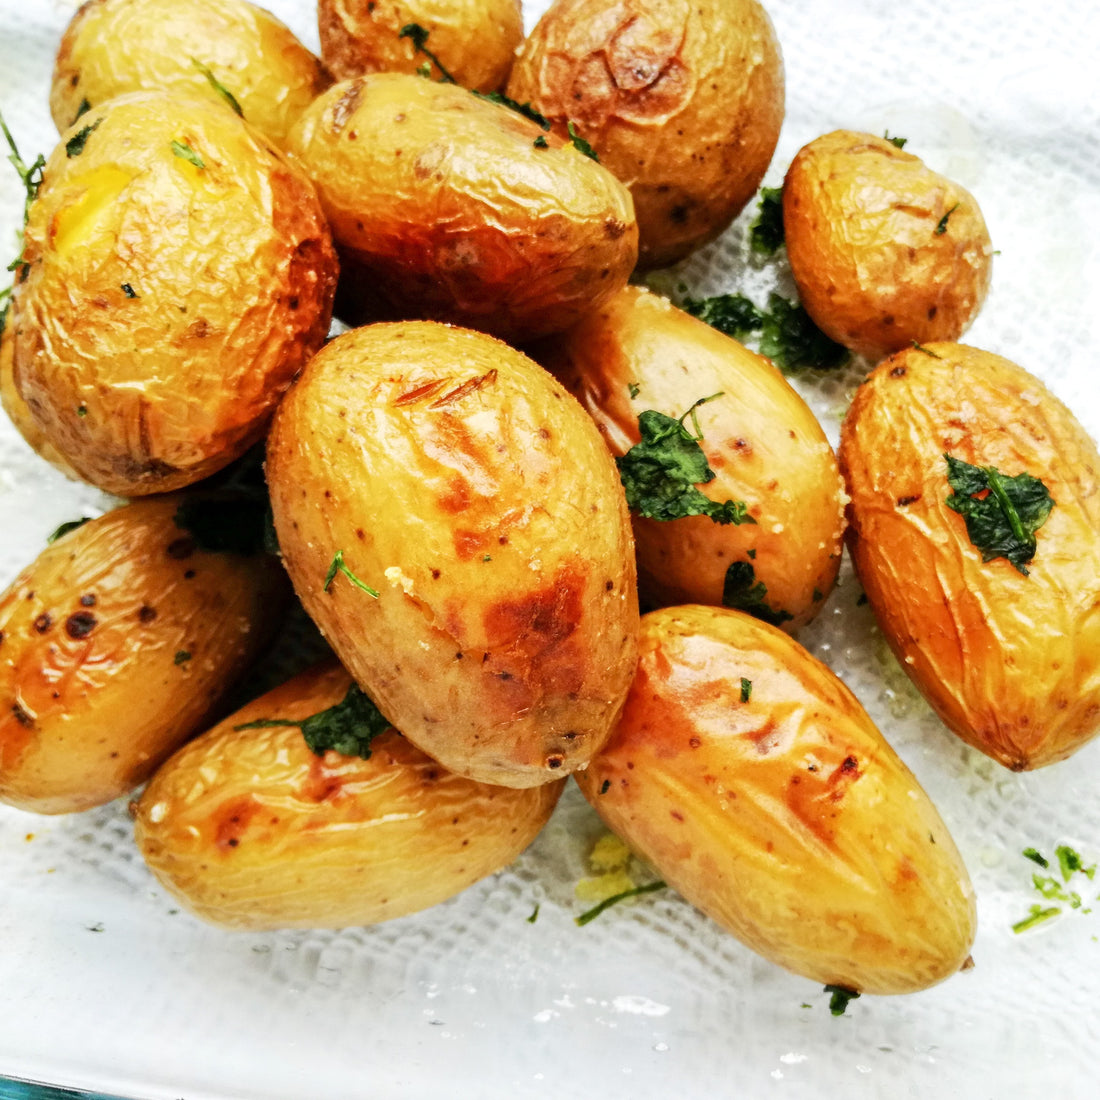 Roasted Baby Potatoes With Italian Seasoning